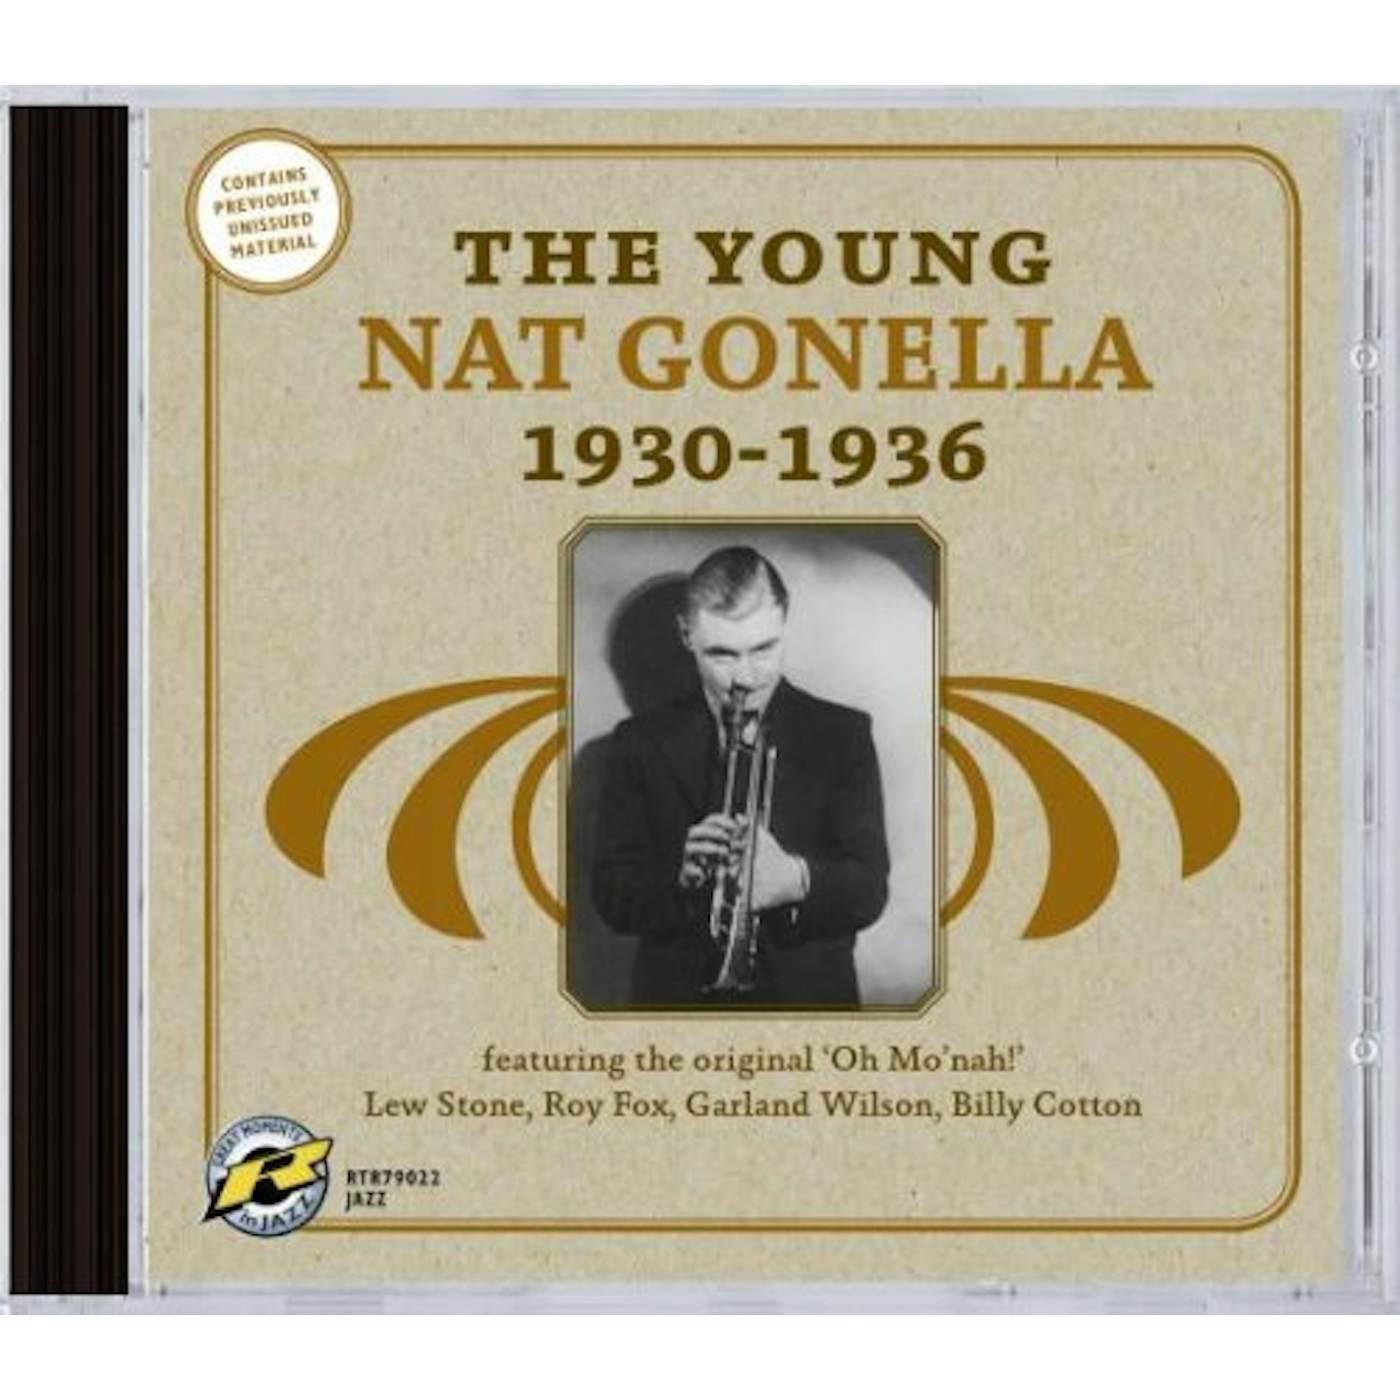 YOUNG NAT GONELLA 1930-1936 CD